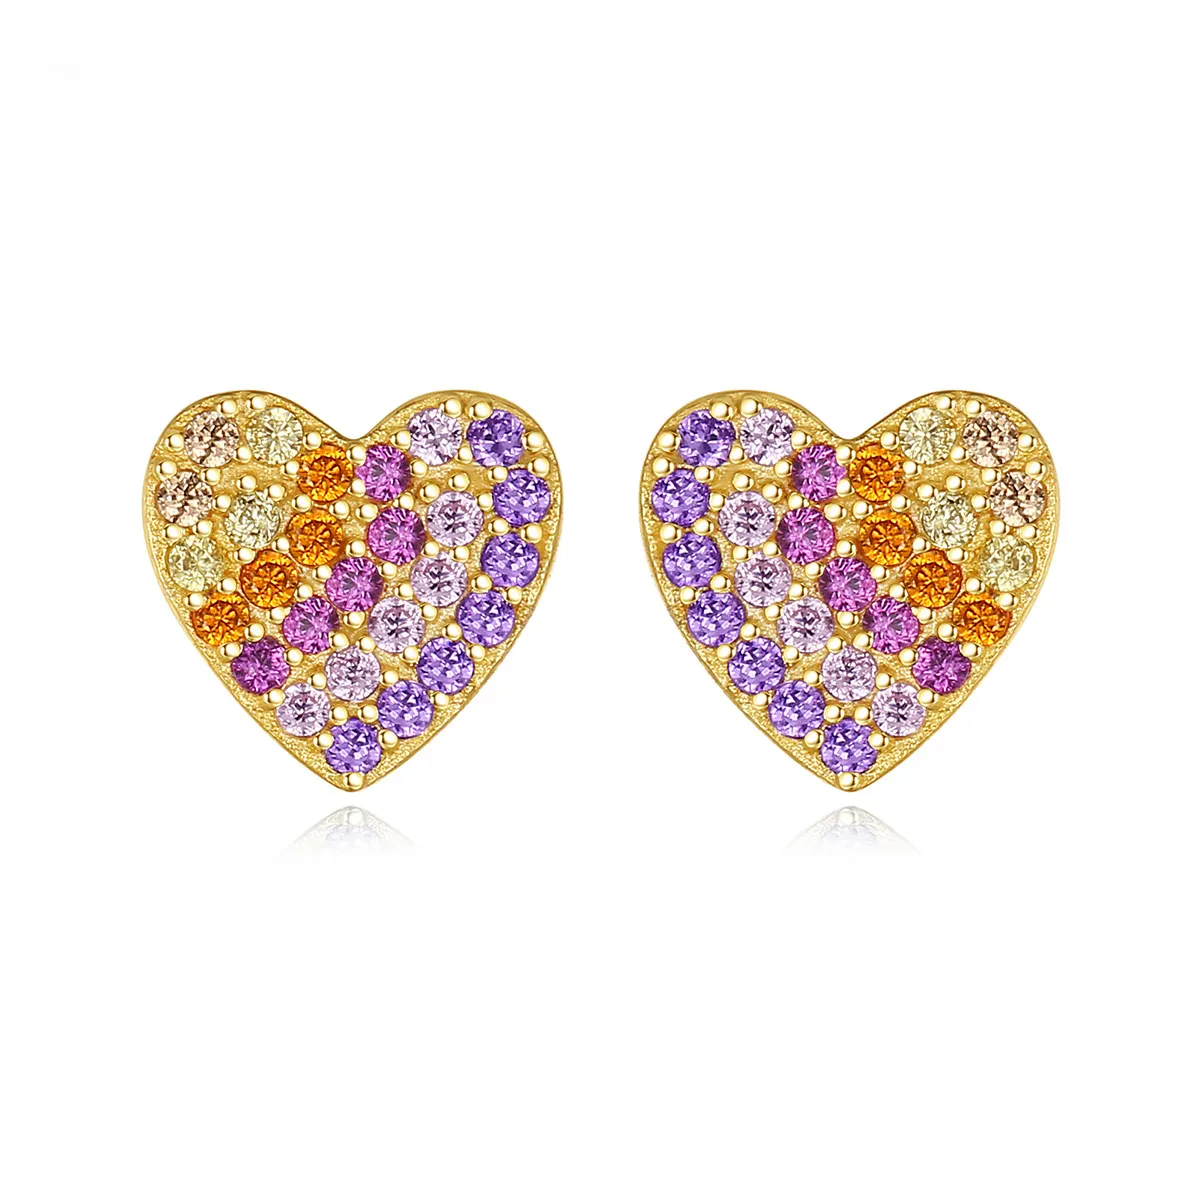 Beautiful 925 Silver Jewelry 18K Gold Plated Zircon Colorful Heart Stud Earrings For Women